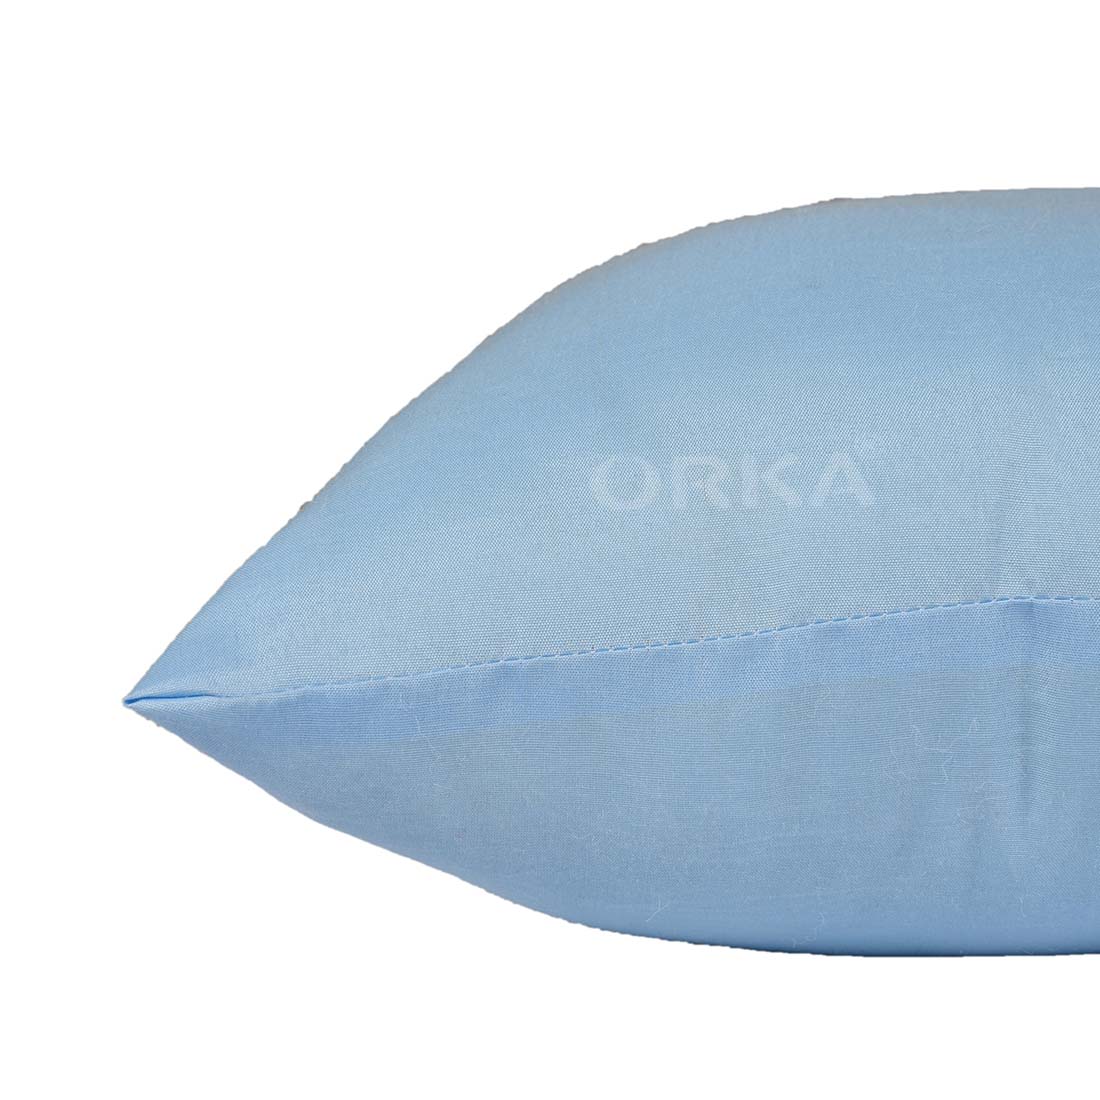 ORKA Cushion Cover Insert (Sky Blue)  